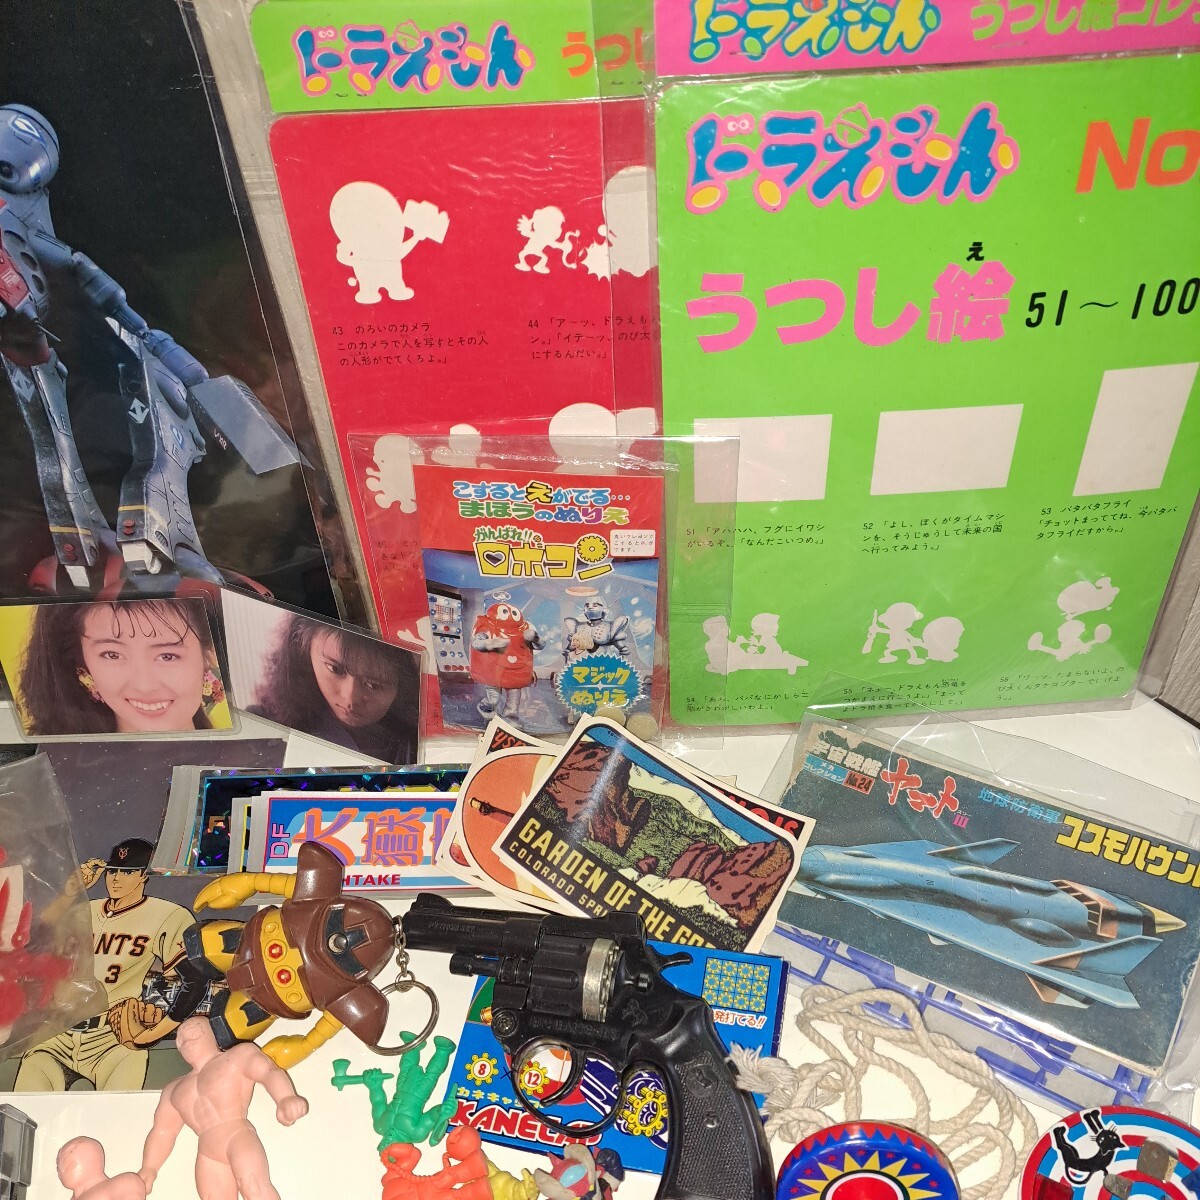  Showa Retro cheap sweets dagashi shop toy various large amount set secondhand goods 